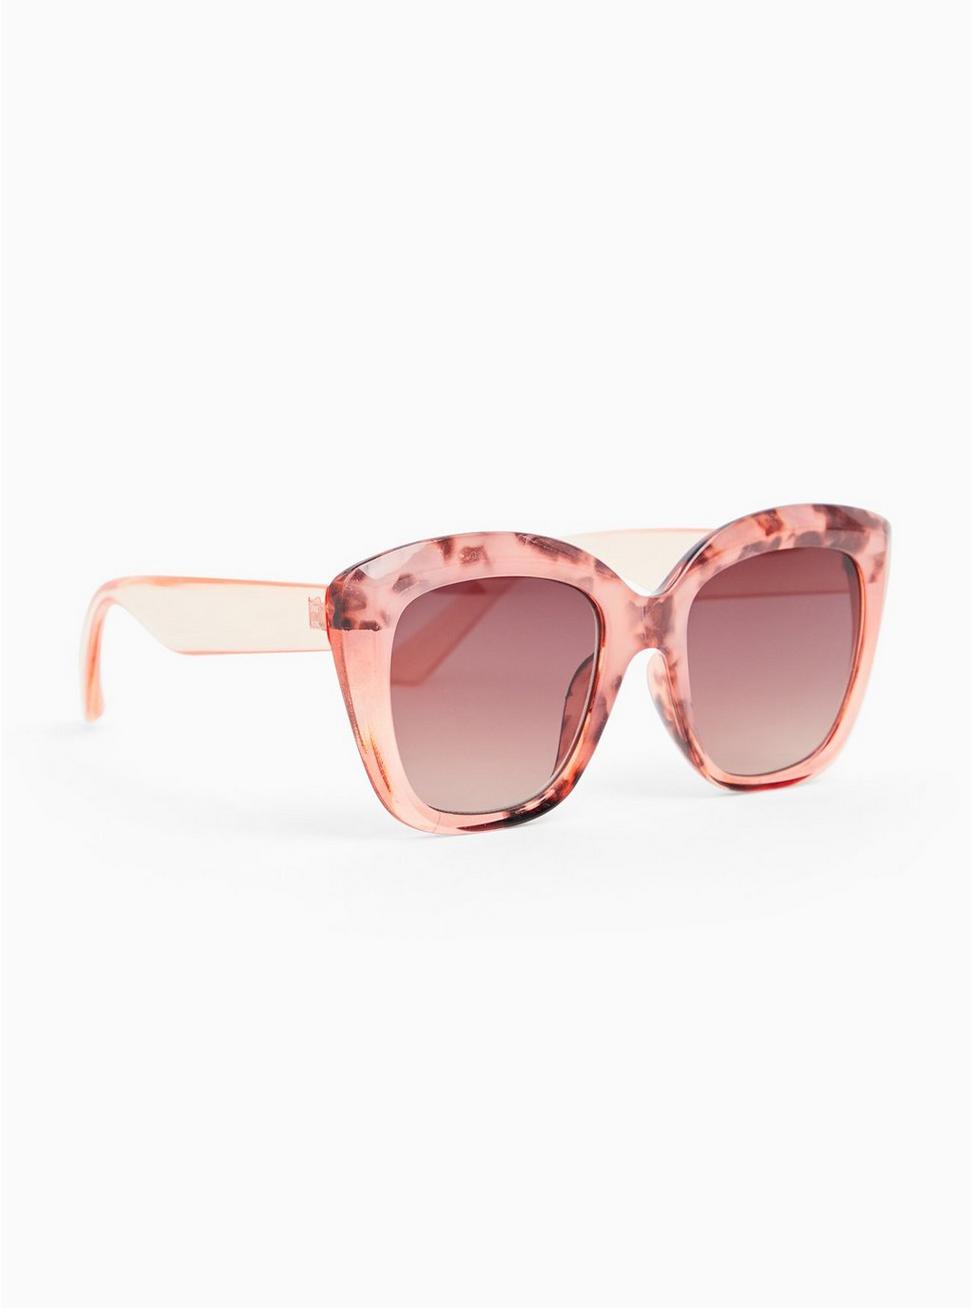 Plus Size - Pink Speckled Cat Eye Sunglasses - Torrid